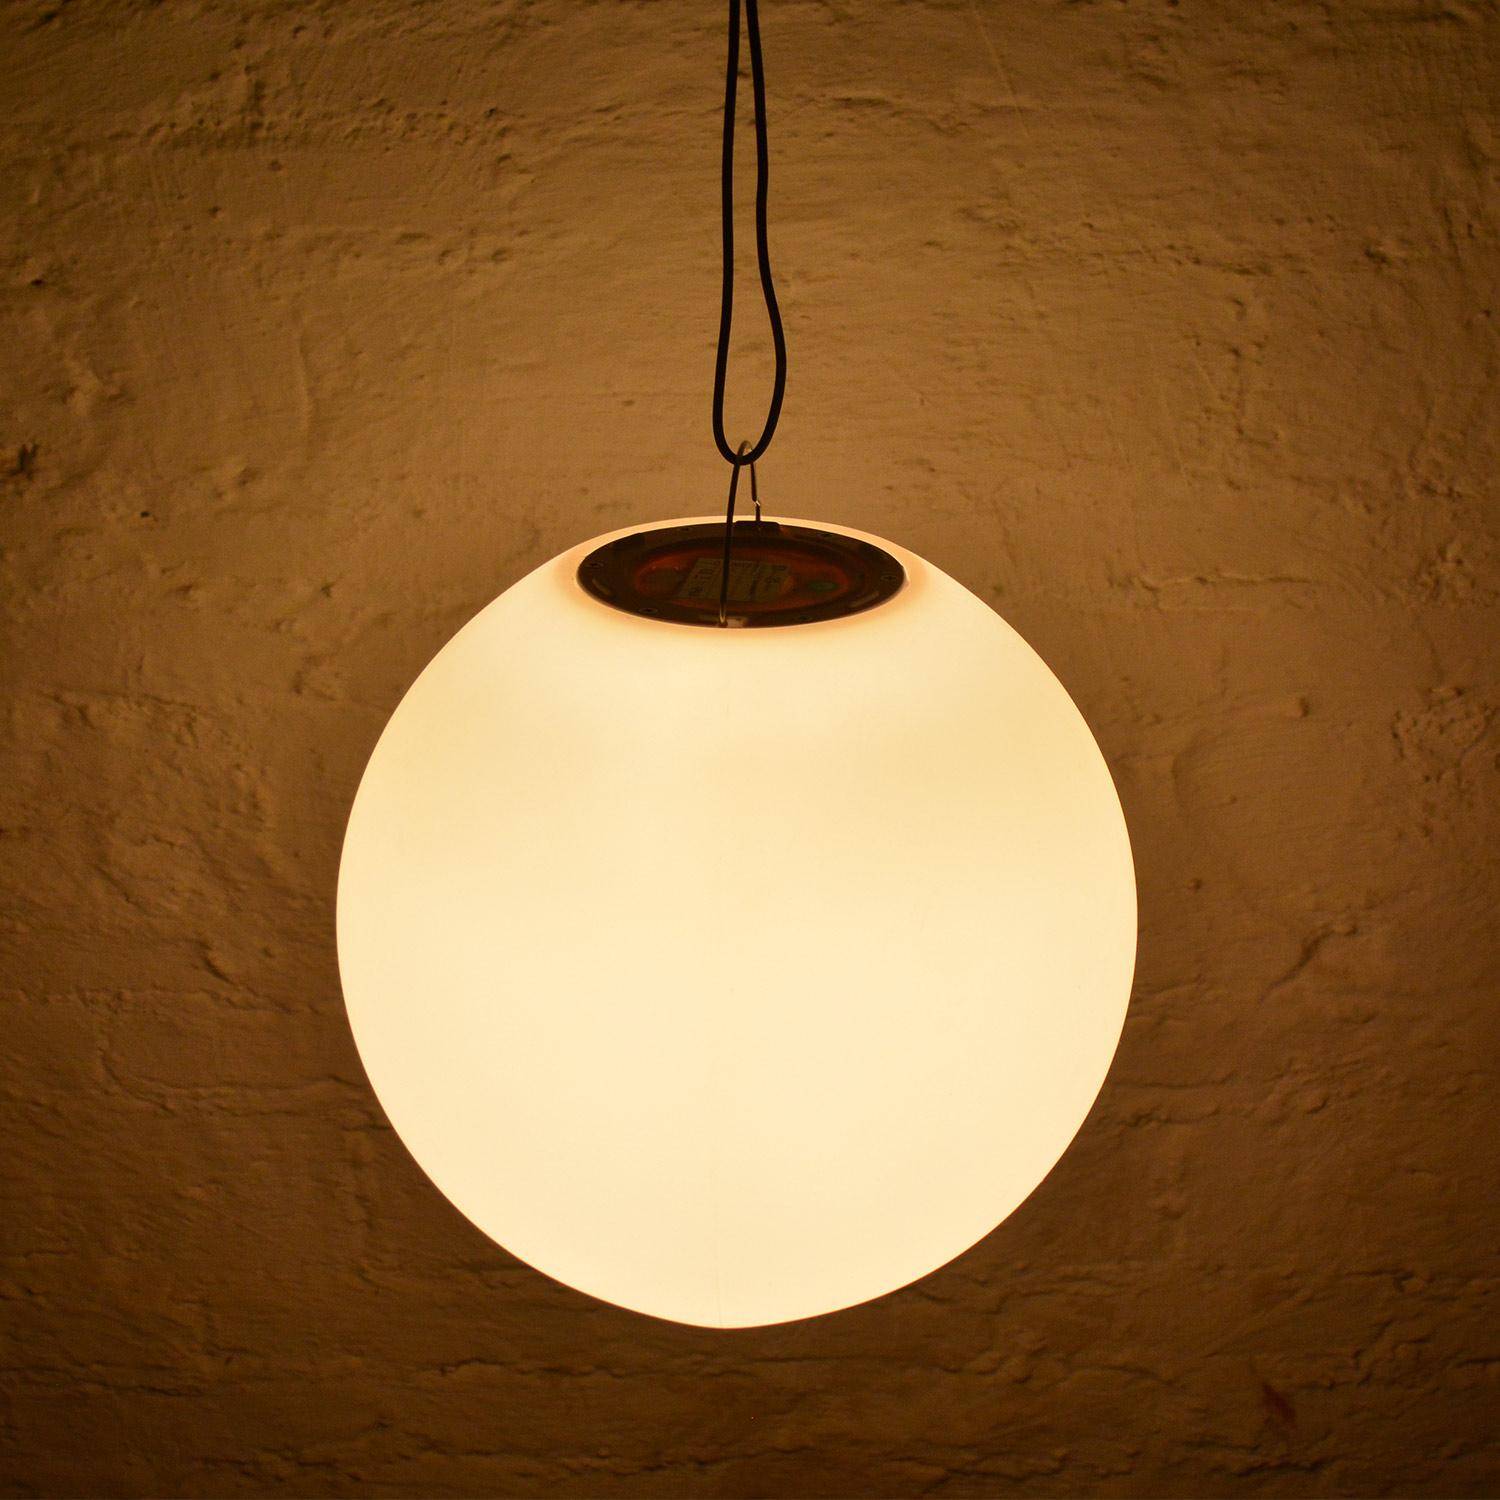 Bola LED 30cm - Esfera luminosa decorativa, Ø30cm, blanco cálido, mando a distancia,sweeek,Photo6